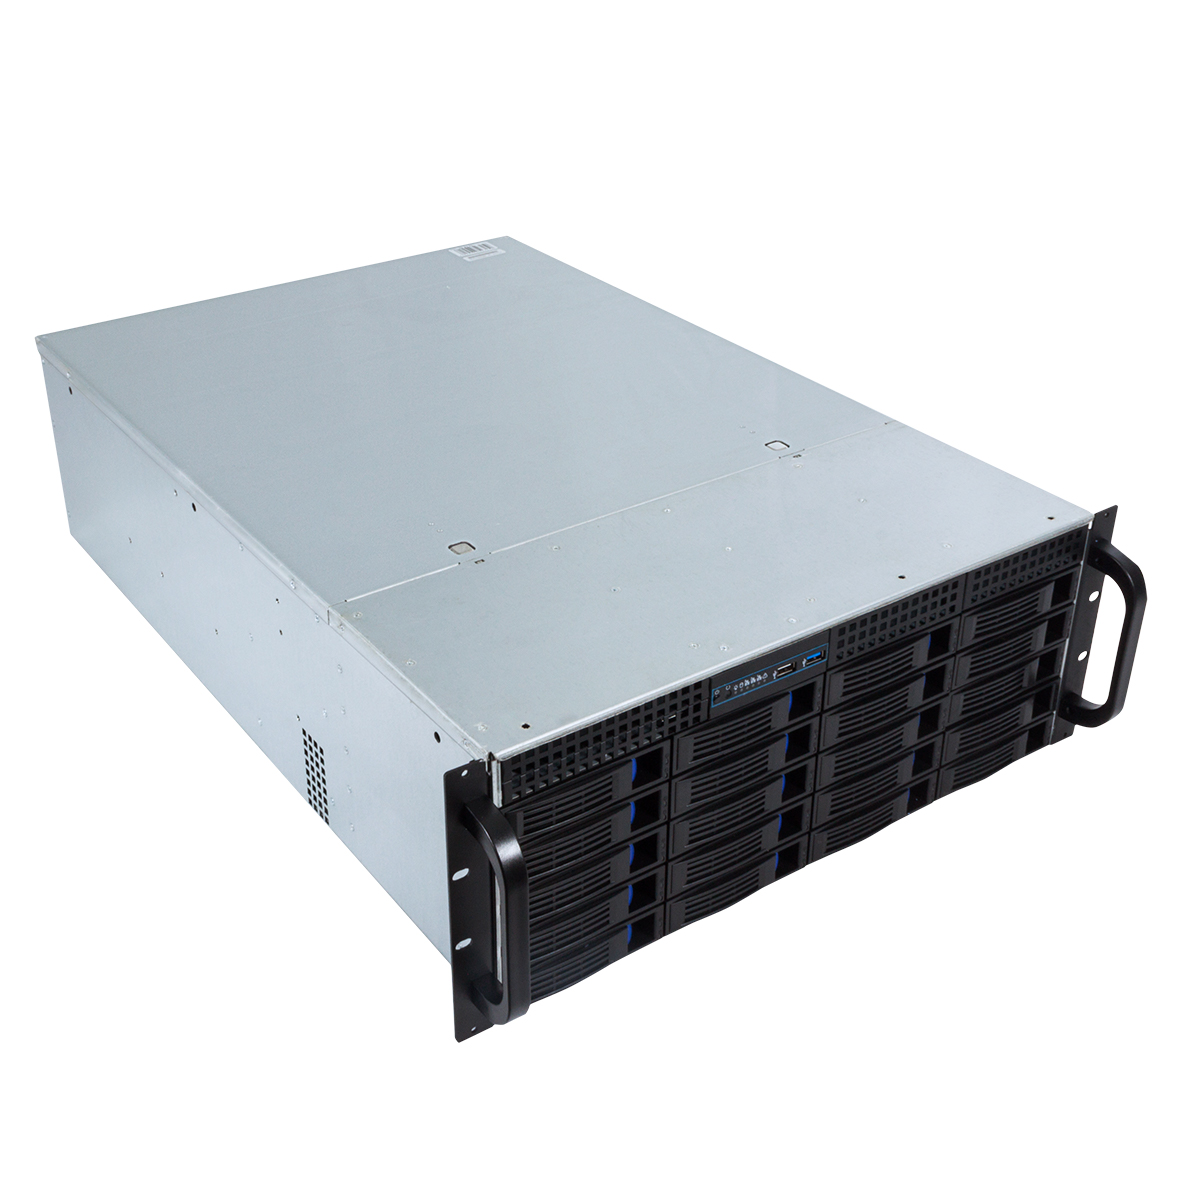 Unykach HSW4520 Server 4U Rack 20 Bays Hot Swap - Tailles de disque prises en charge 2,5", 3,5" - Cartes mères compatibles EEB, CEB, ATX, MicroATX - USB-A 2.0/3.0